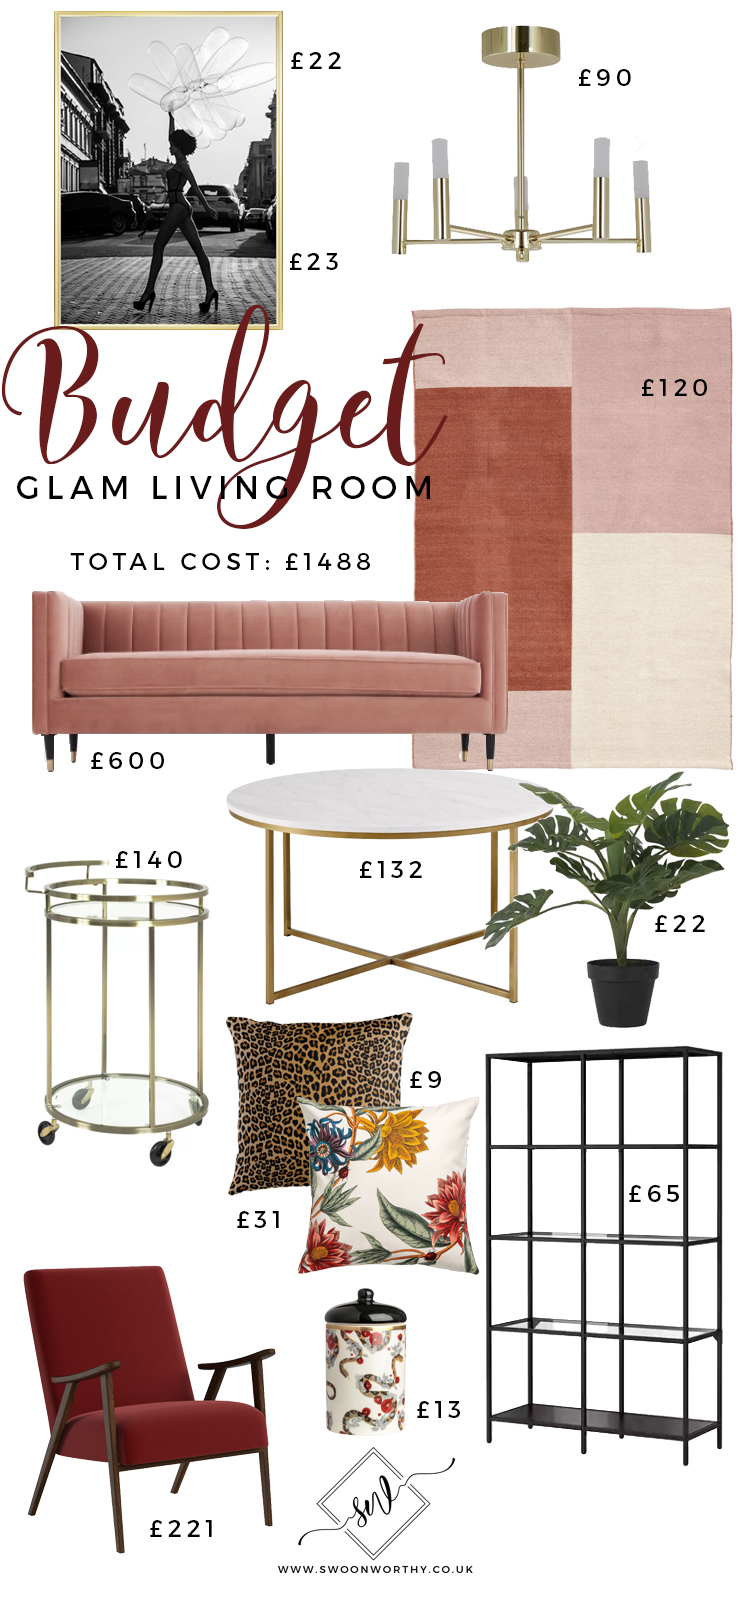 Budget Glam Living Room under £1500